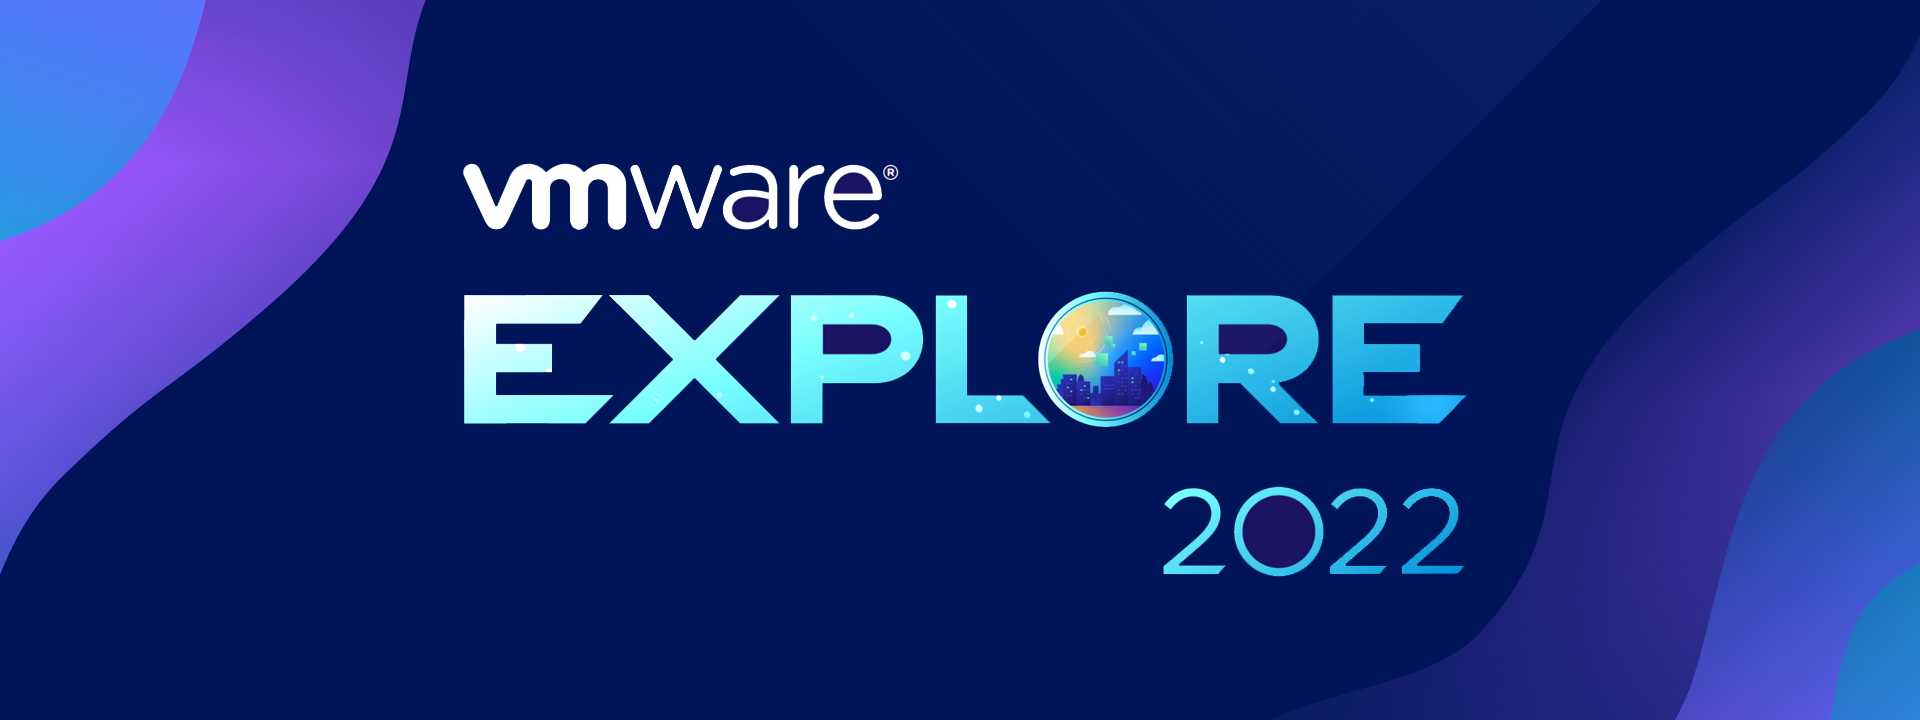 Event branding for VMware Explore 2022